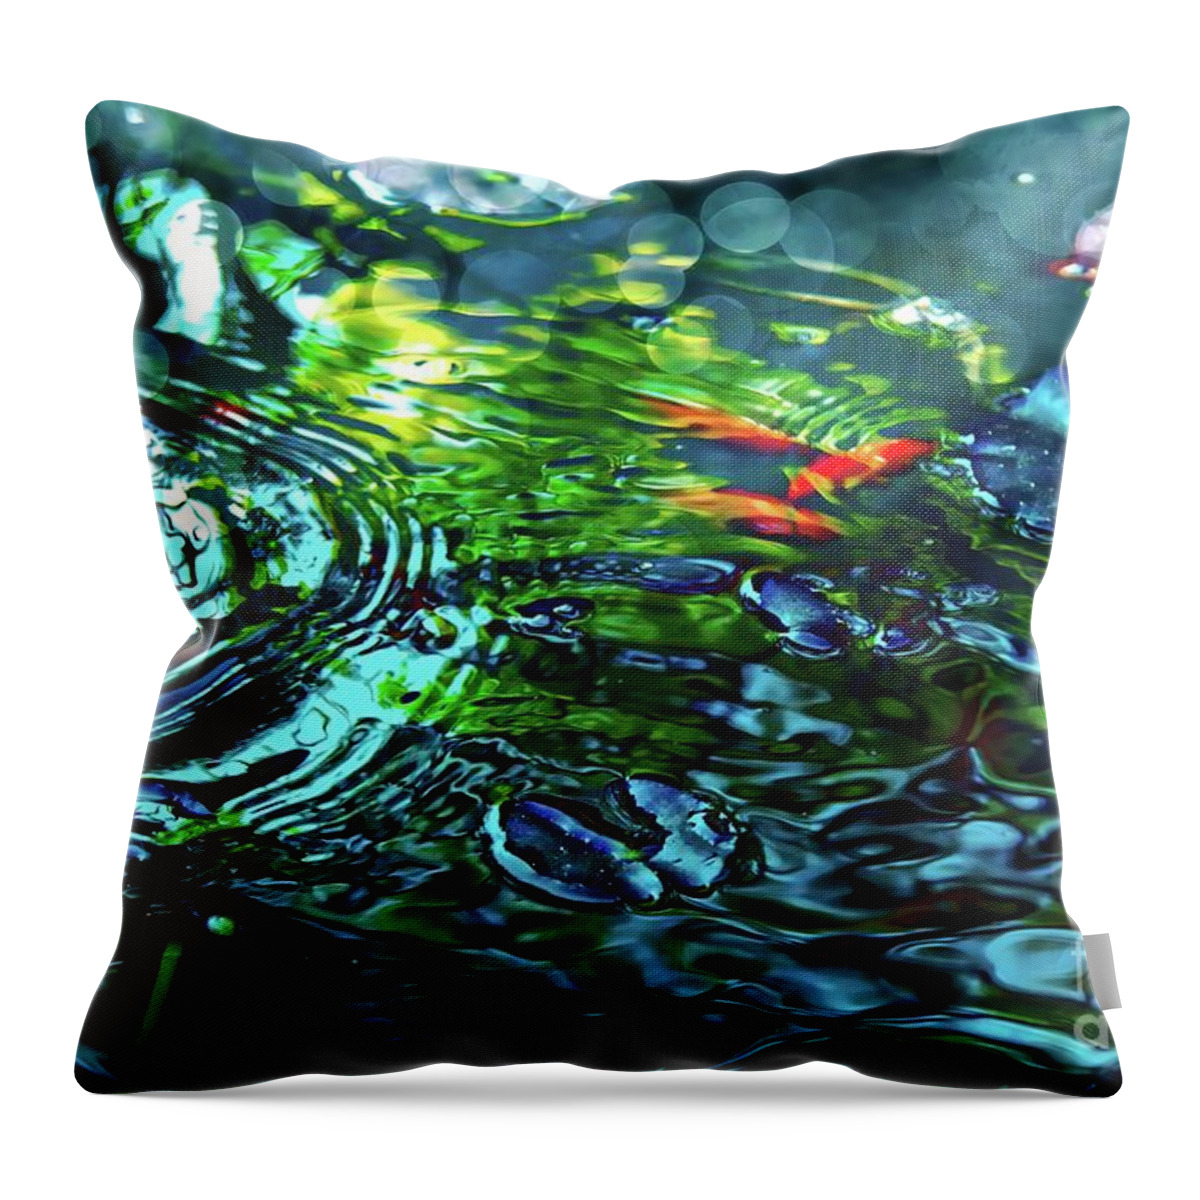 Pond Throw Pillow featuring the mixed media Tranquil water ripples by Jolanta Anna Karolska